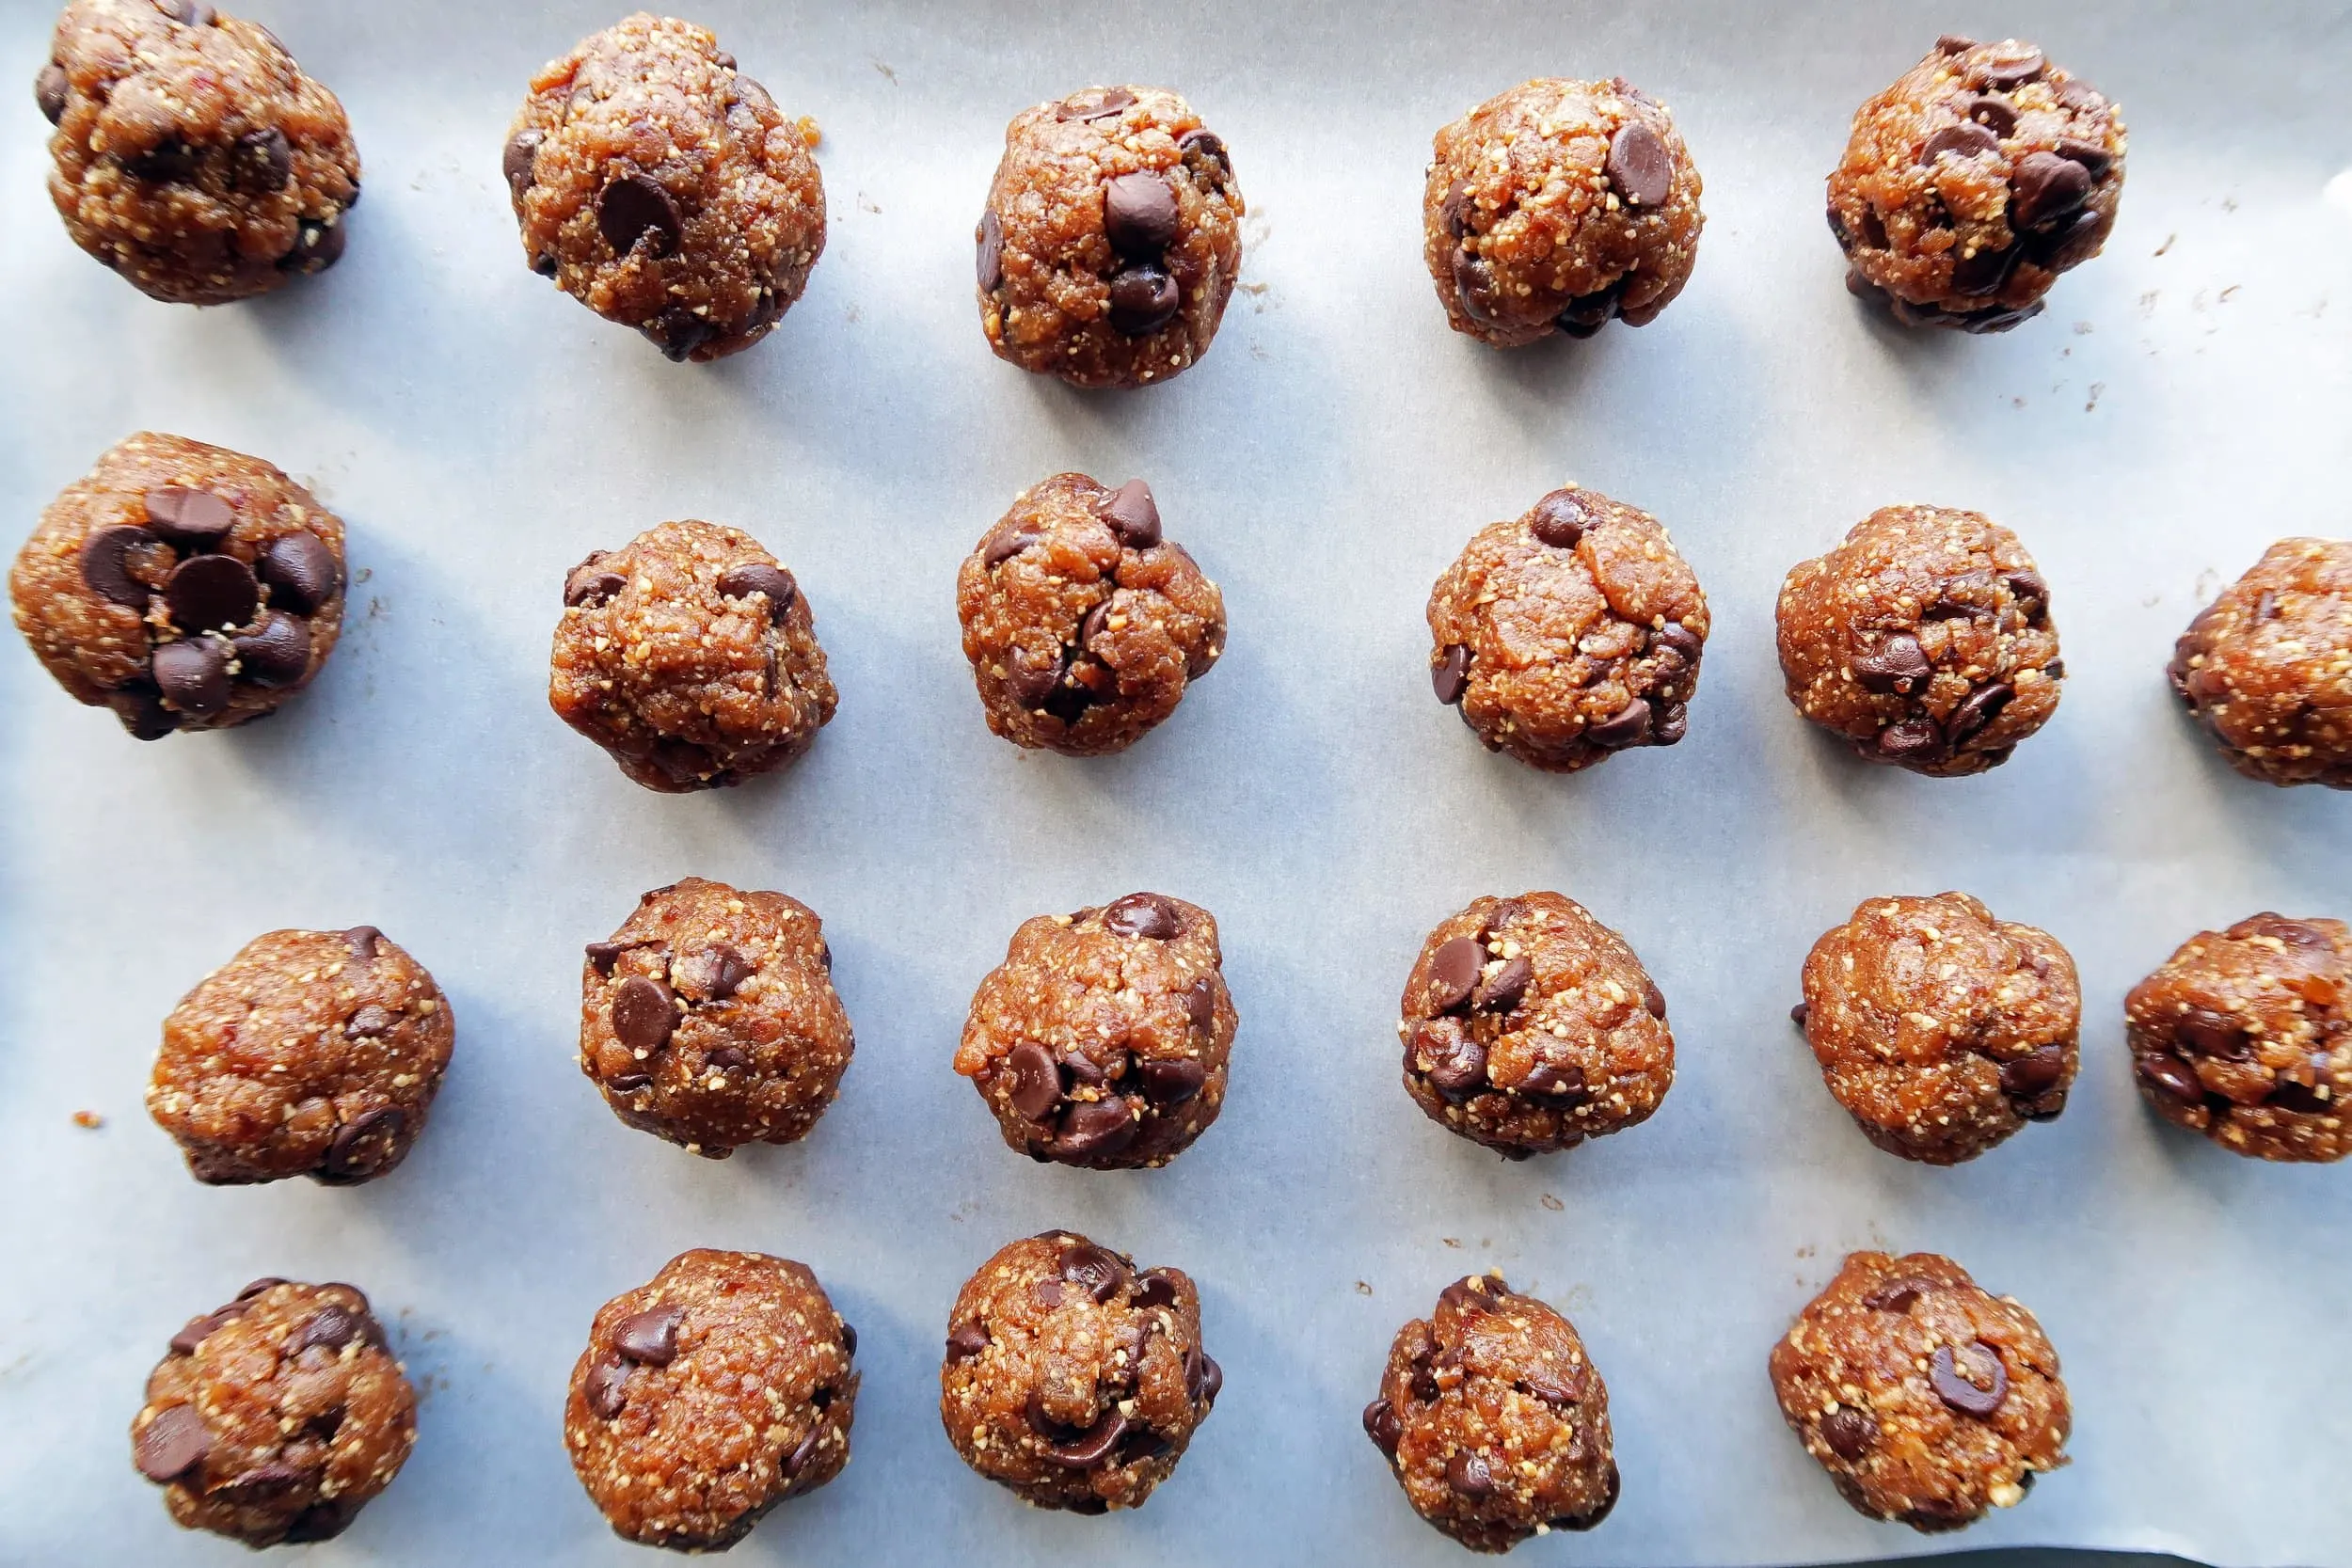 Twenty-two one-inch peanut chocolate chip energy balls on a baking sheet.